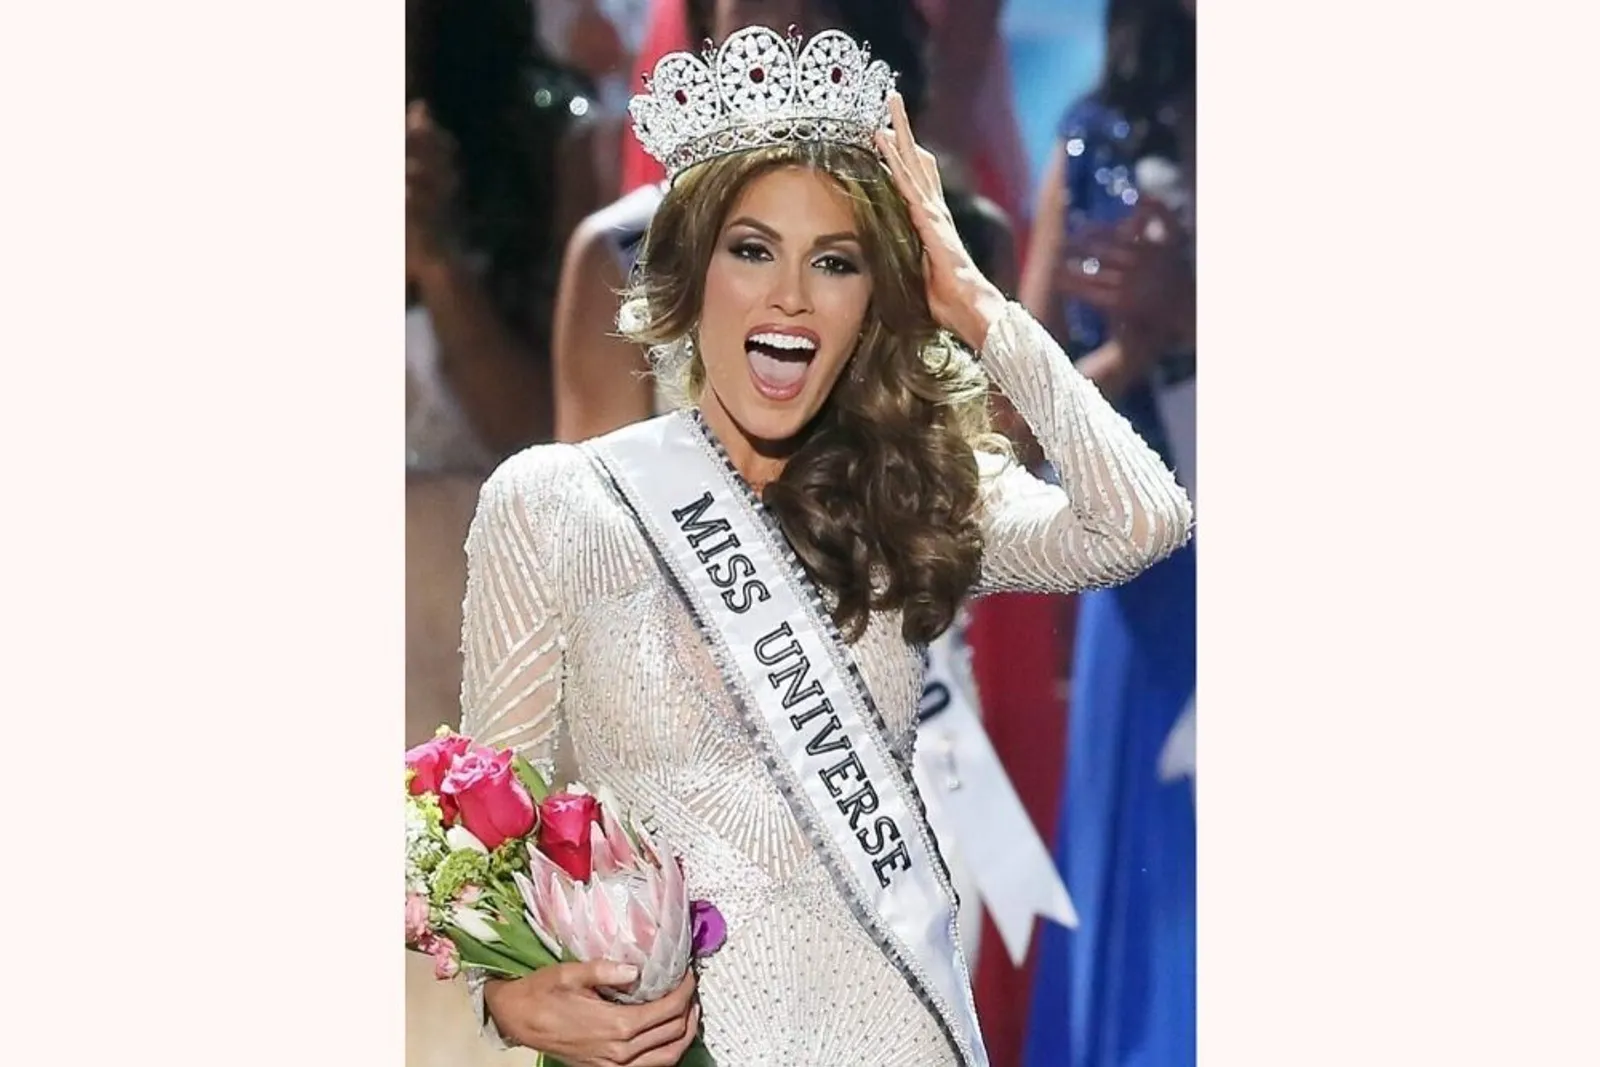 Deretan Potret Para Miss Universe dari Tahun 2010-2019